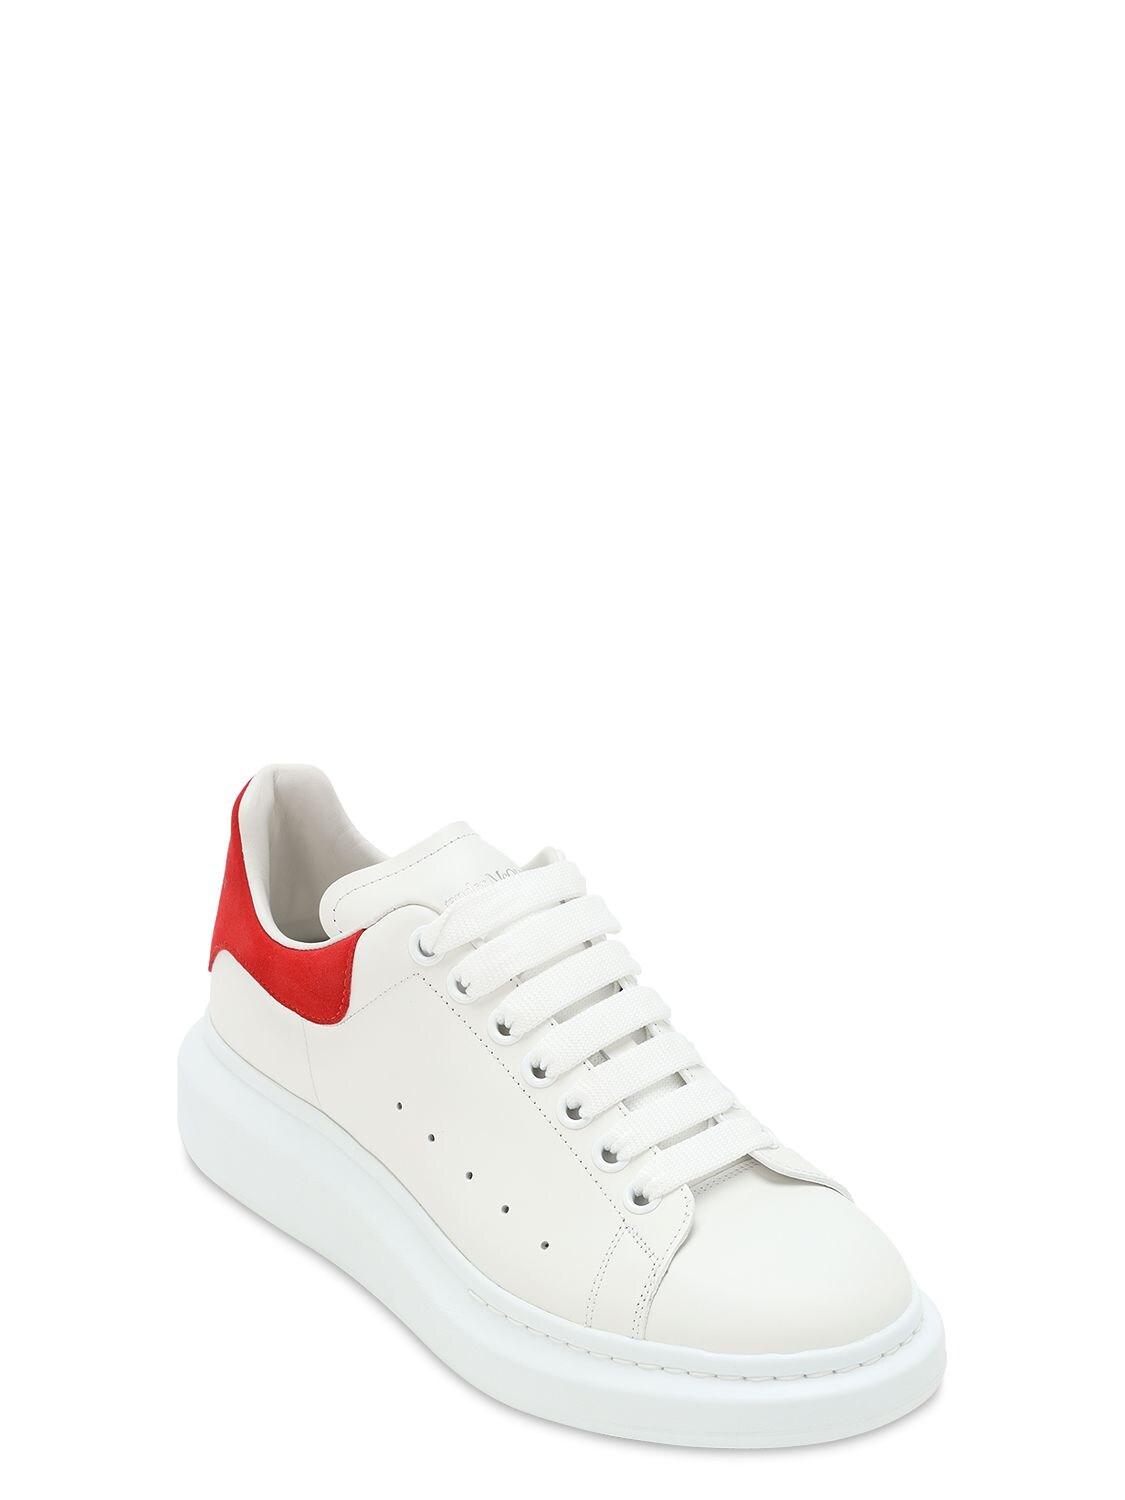 Alexander McQueen Sneakers Red in White | Lyst